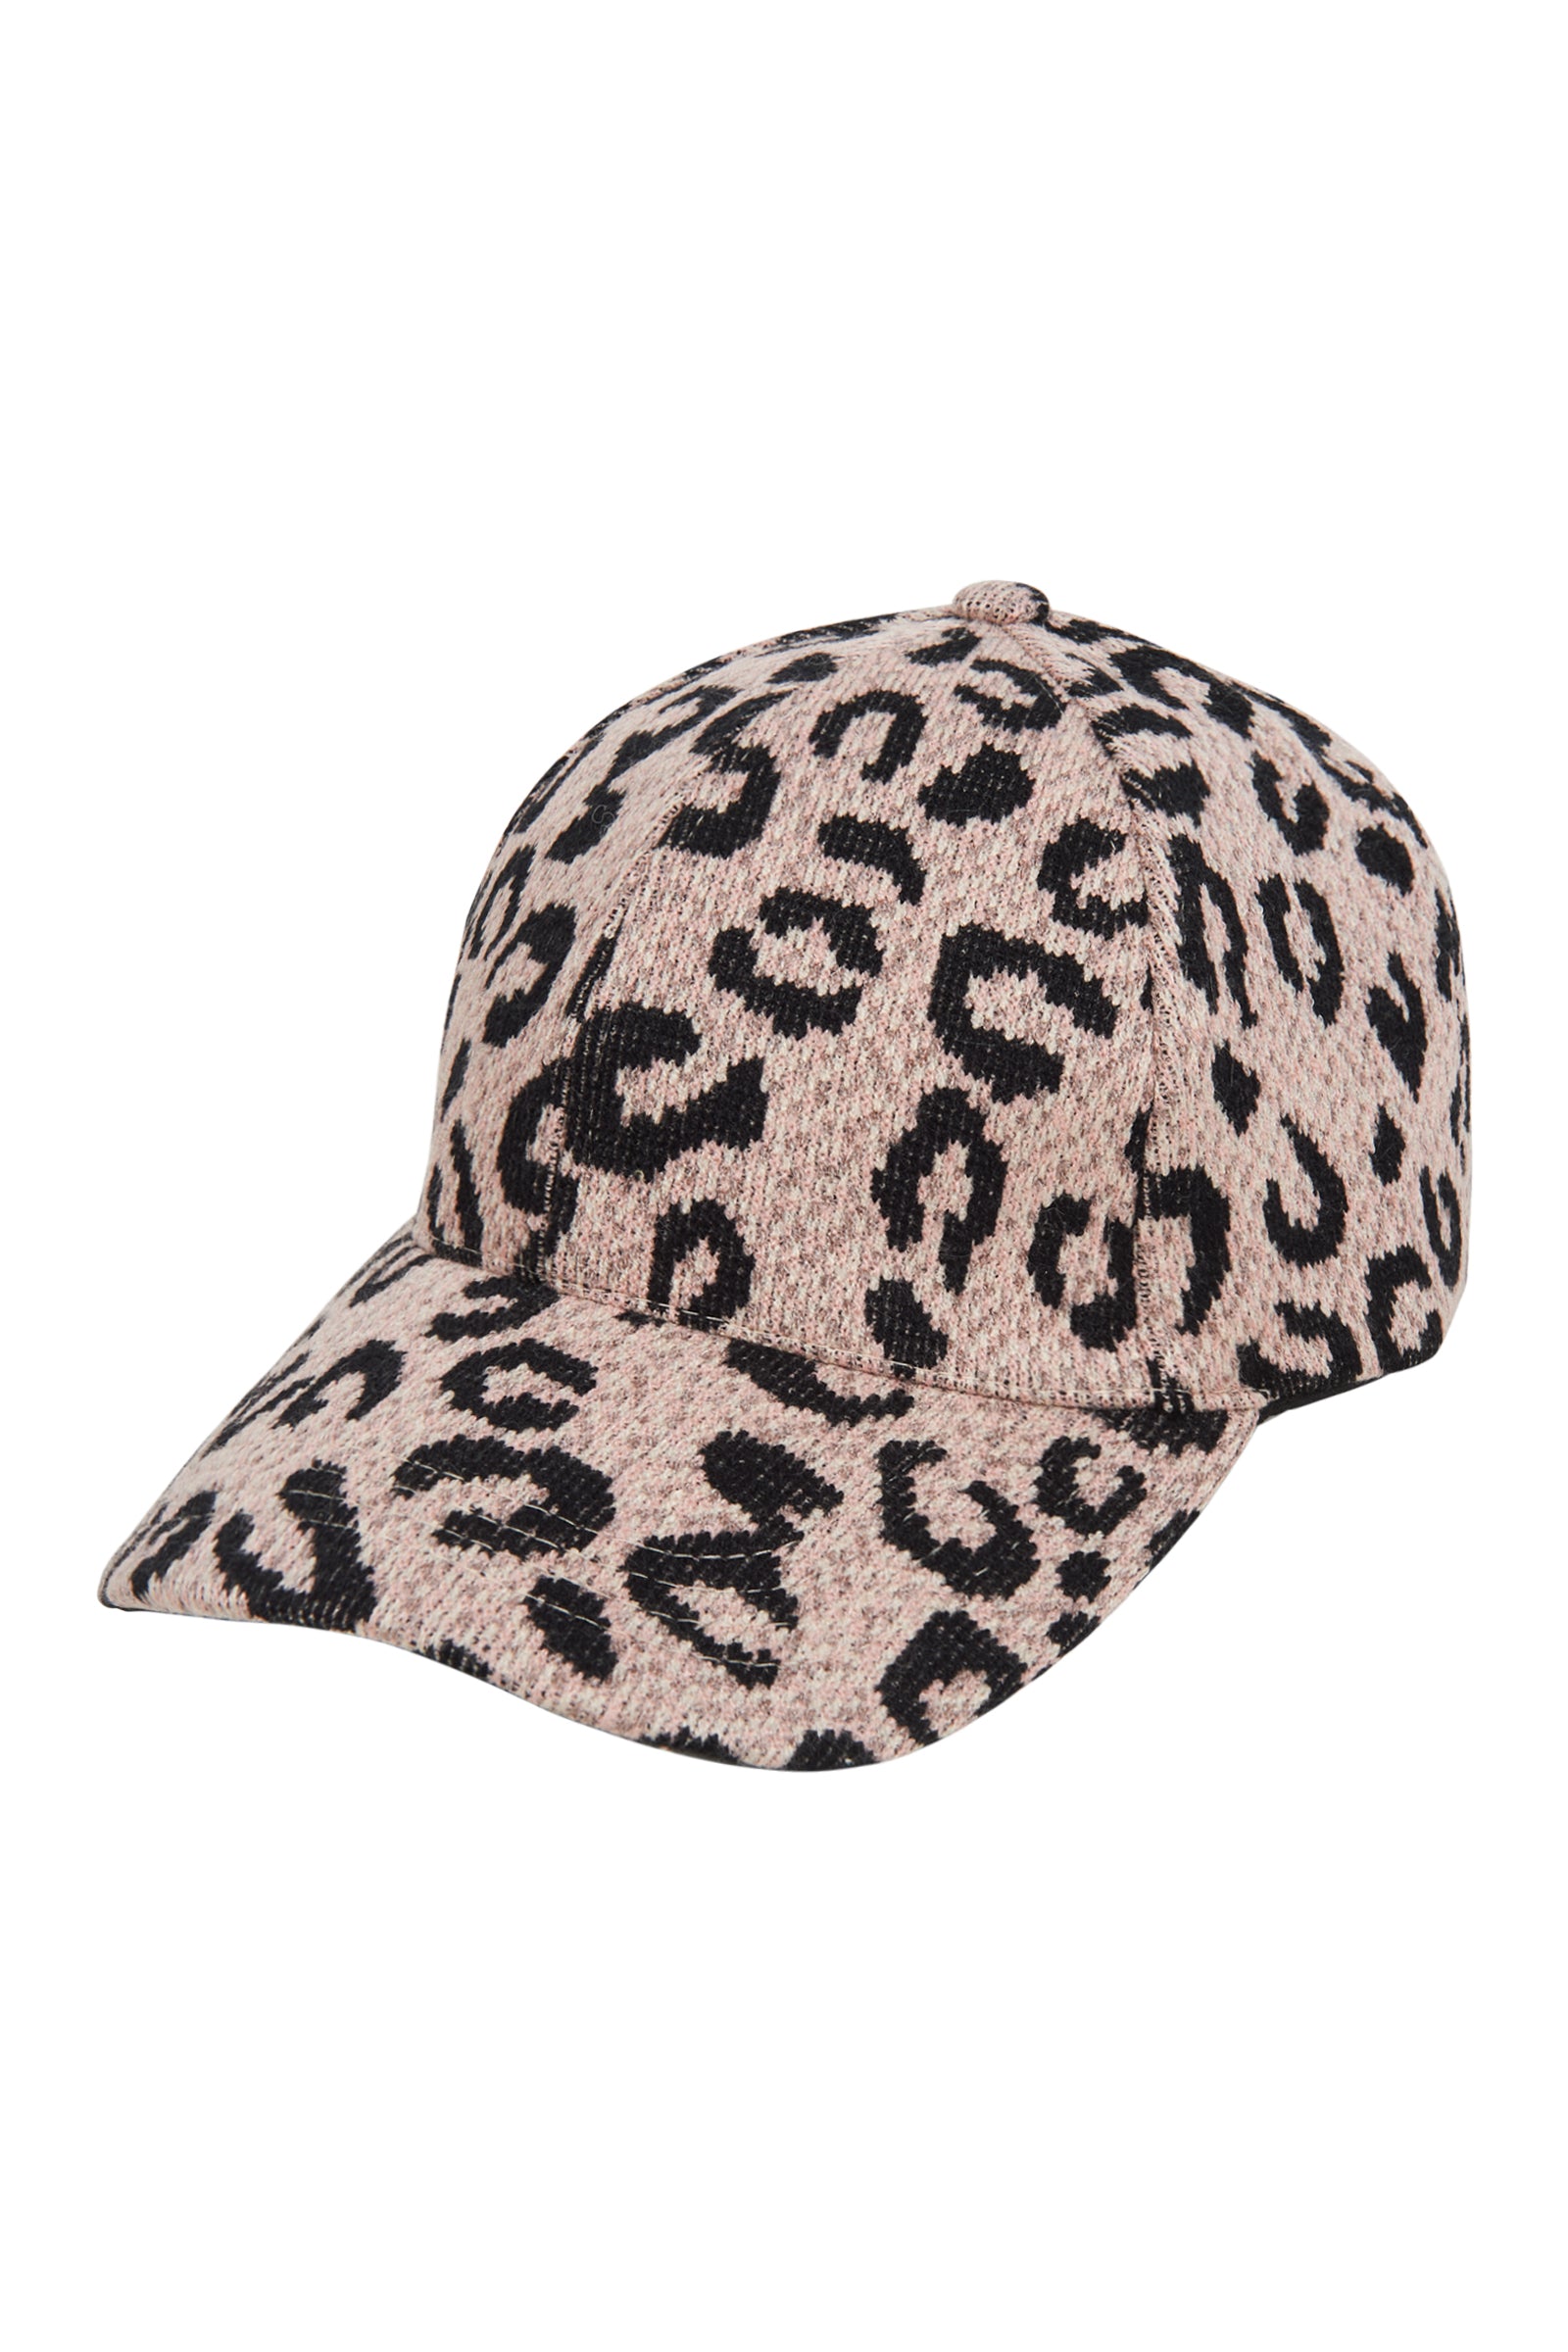 Pilbara Cap - Ebony - eb&ive Hat